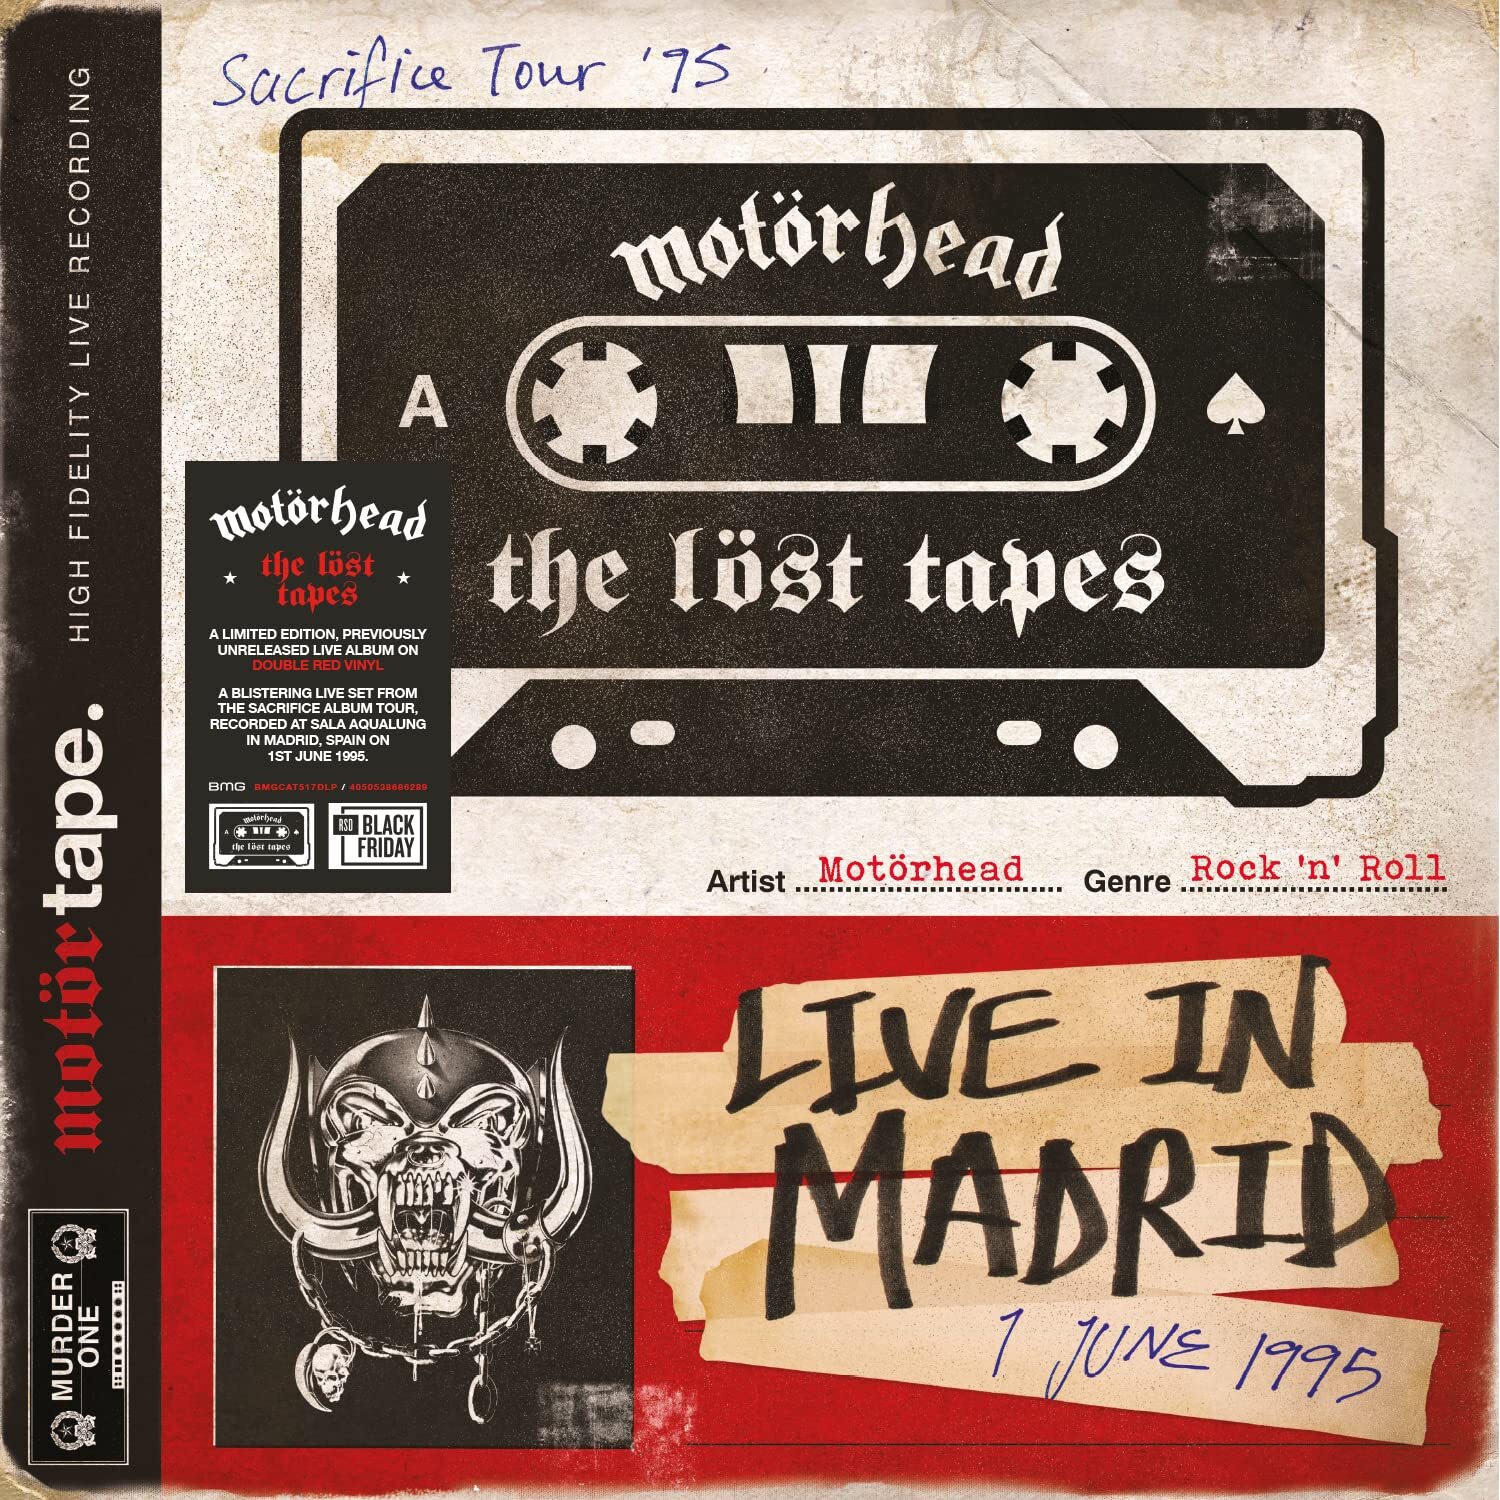 Рок Warner Music Motorhead - The Lost Tapes Vol. 1 Live In Madrid 1 June 1995 (Limited Edition Coloured Vinyl 2LP) хип хоп warner music earl sweatshirt sick coloured vinyl lp